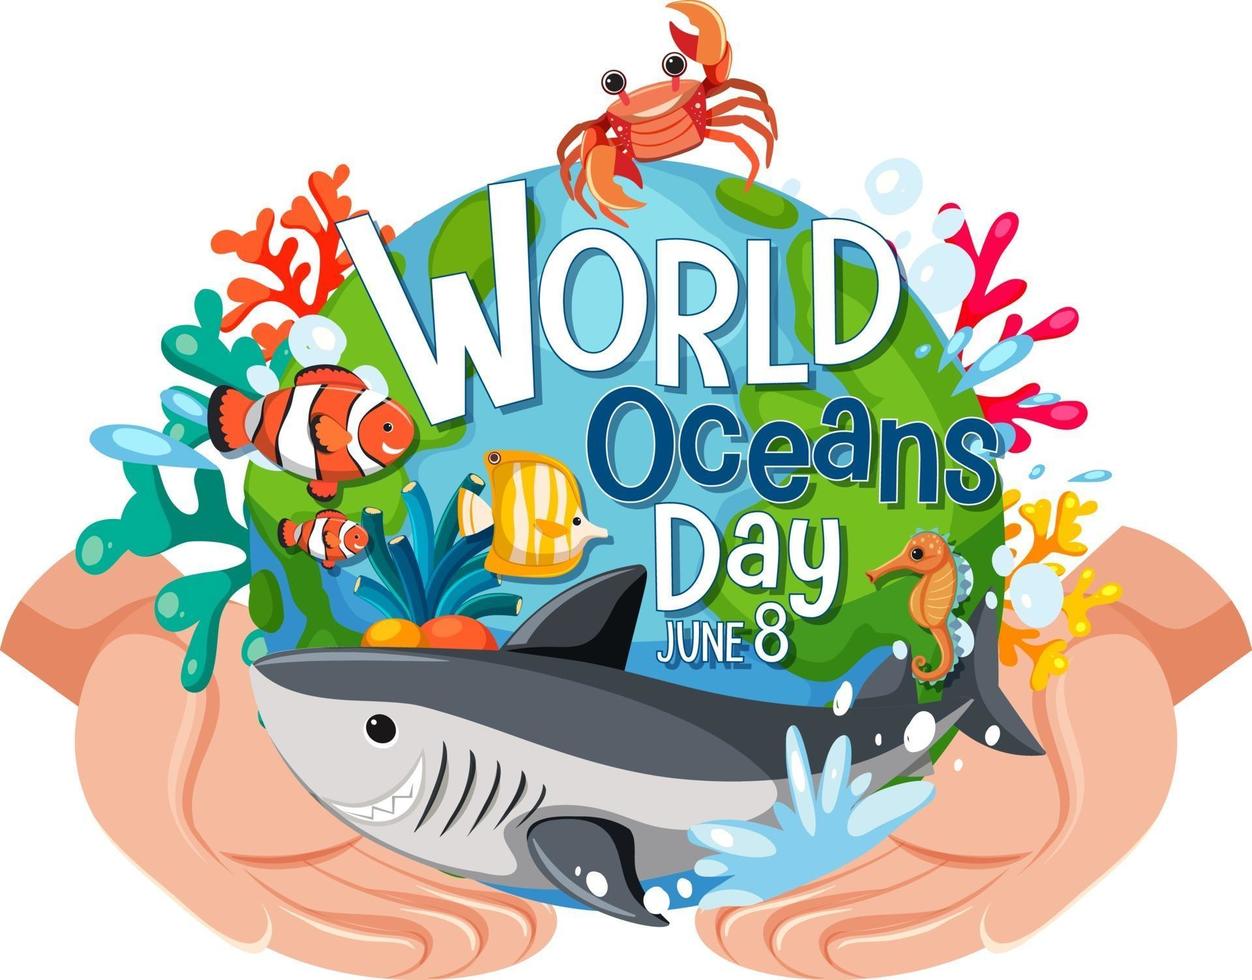 World Ocean Day banner with sea animals cartoon character vector